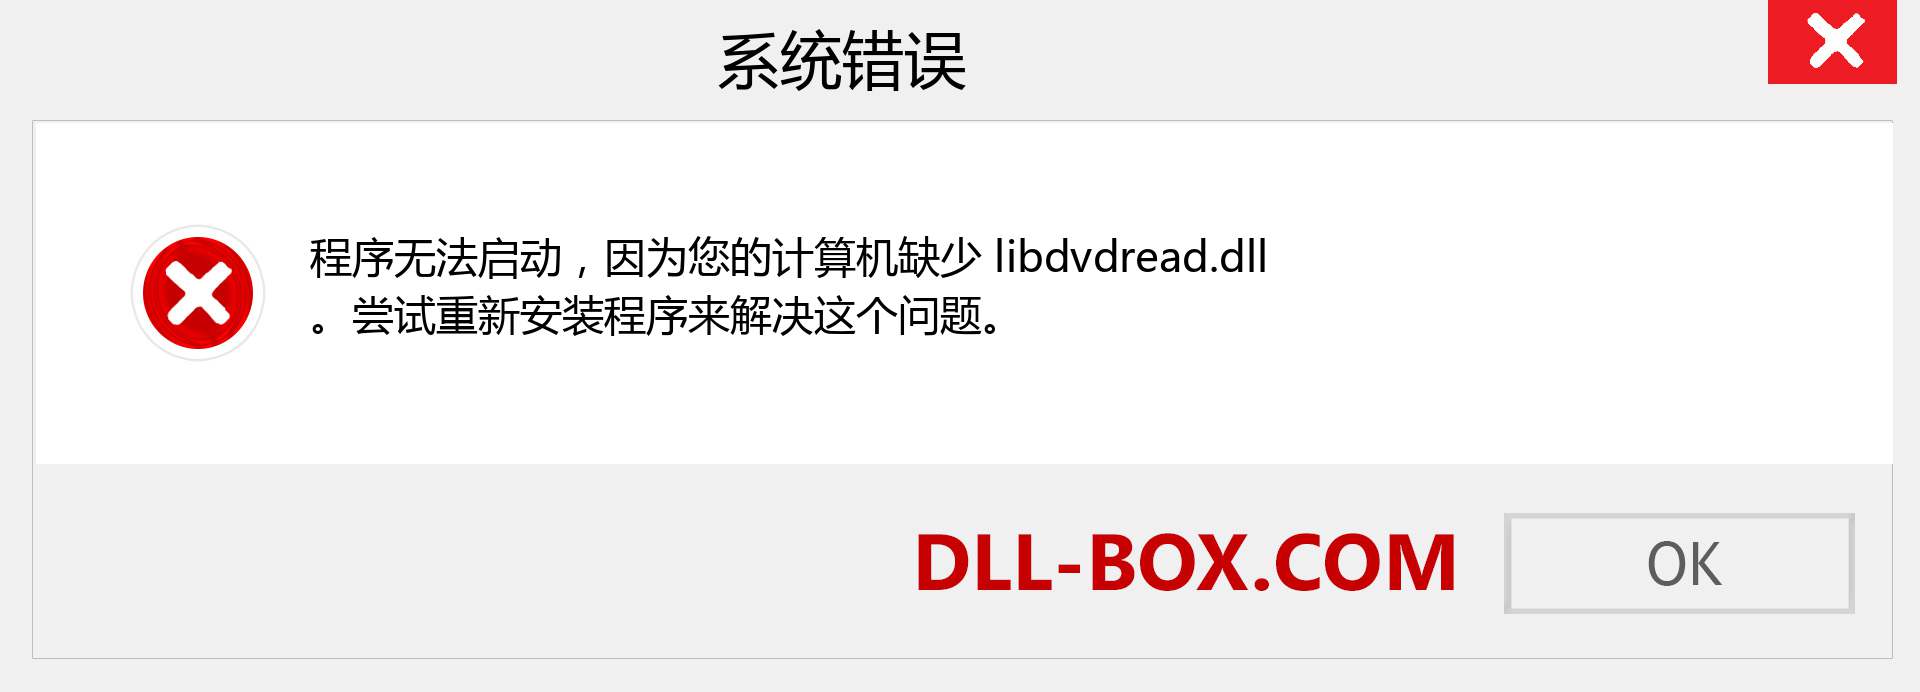 libdvdread.dll 文件丢失？。 适用于 Windows 7、8、10 的下载 - 修复 Windows、照片、图像上的 libdvdread dll 丢失错误